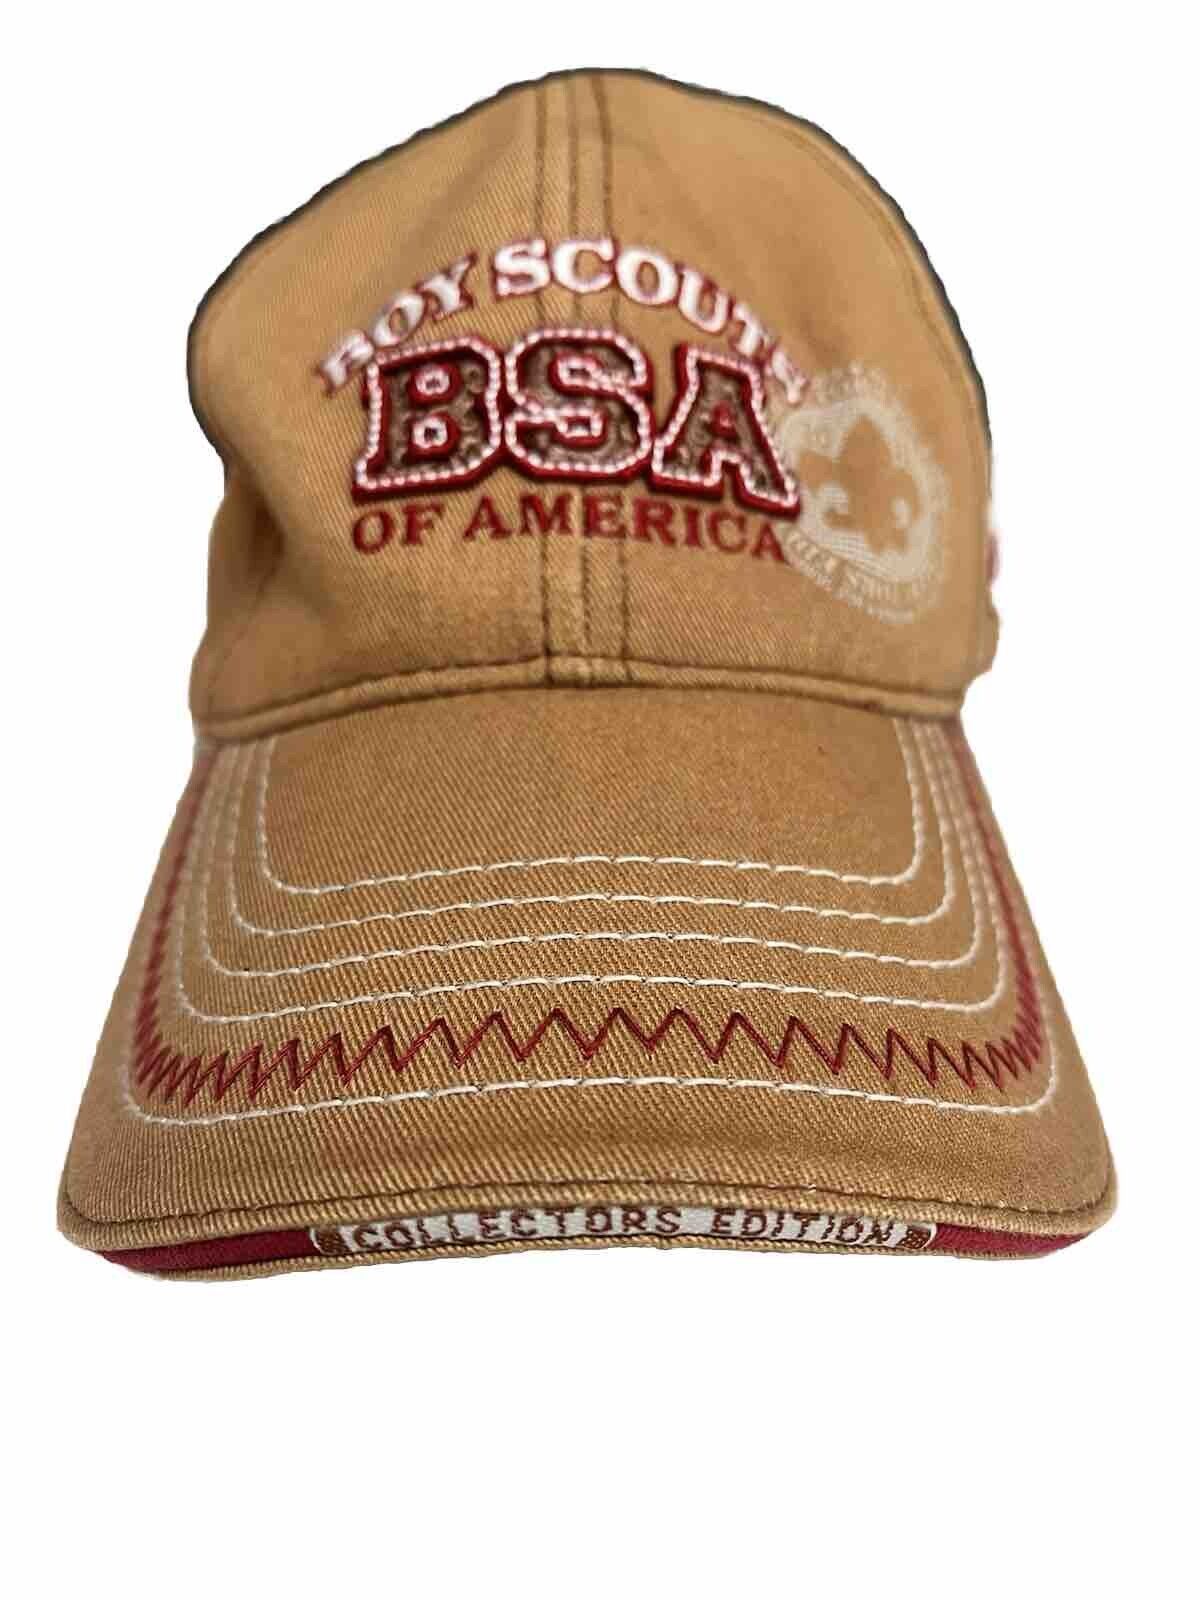 RARE BSA Brown Collectors Edition Boy Scouts 2011